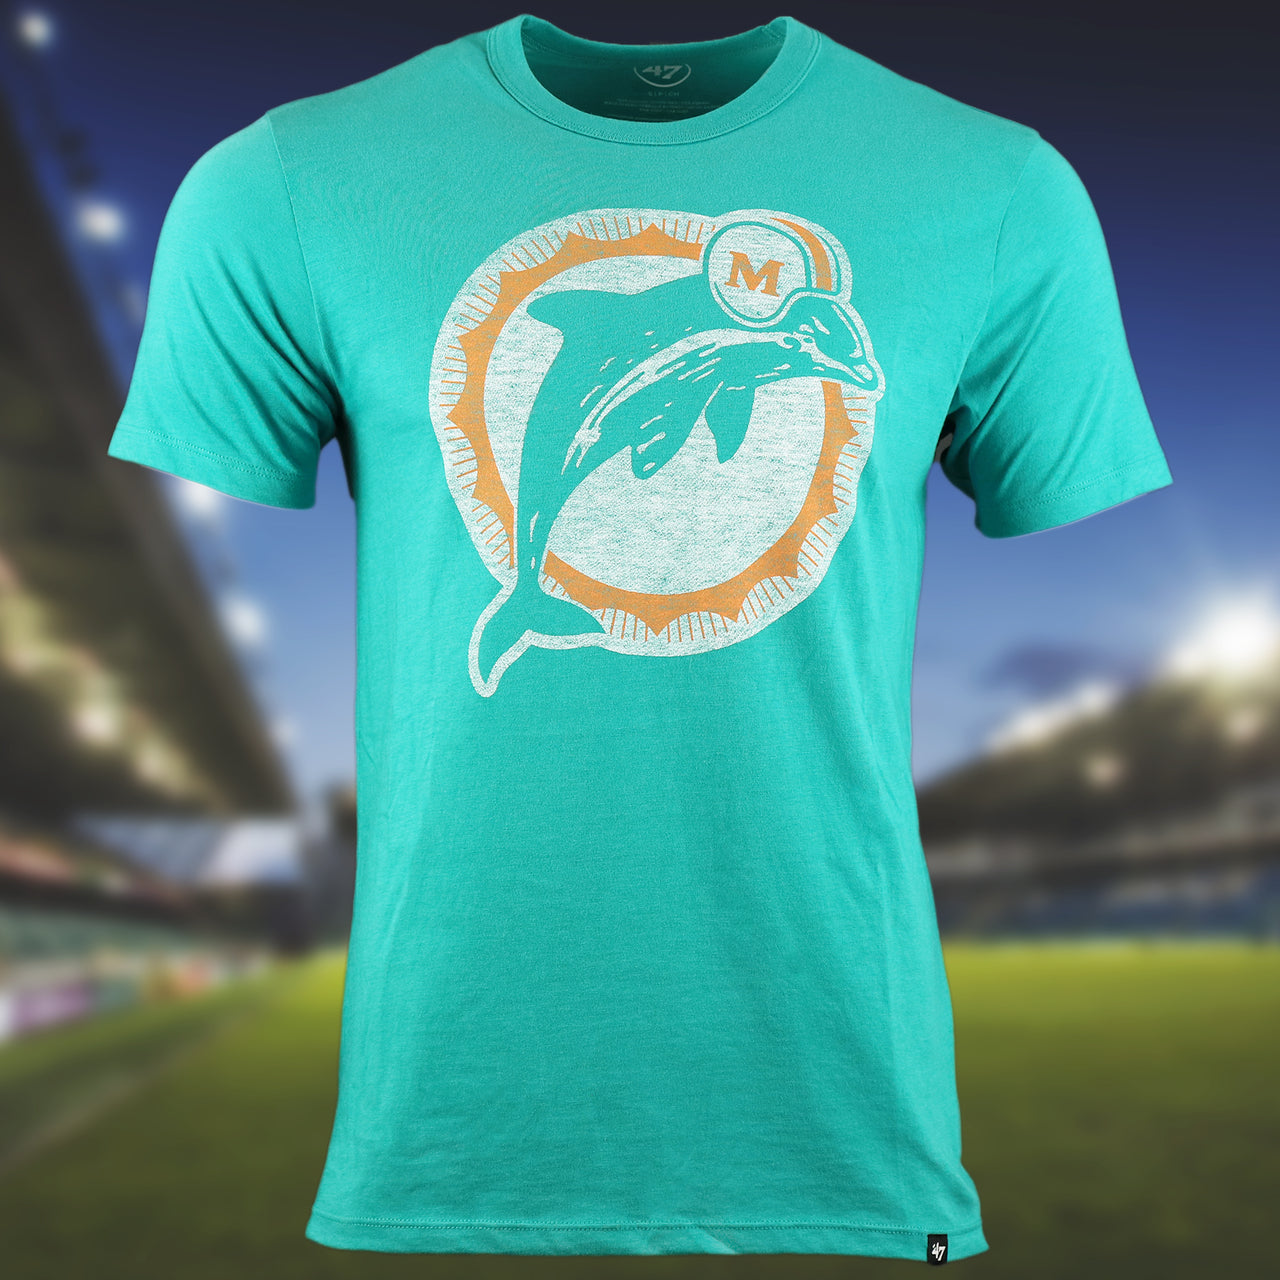 The Throwback Miami Dolphins Worn Printed 1974 Dolphins Logo Tshirt | Oceanic Teal Tshirt